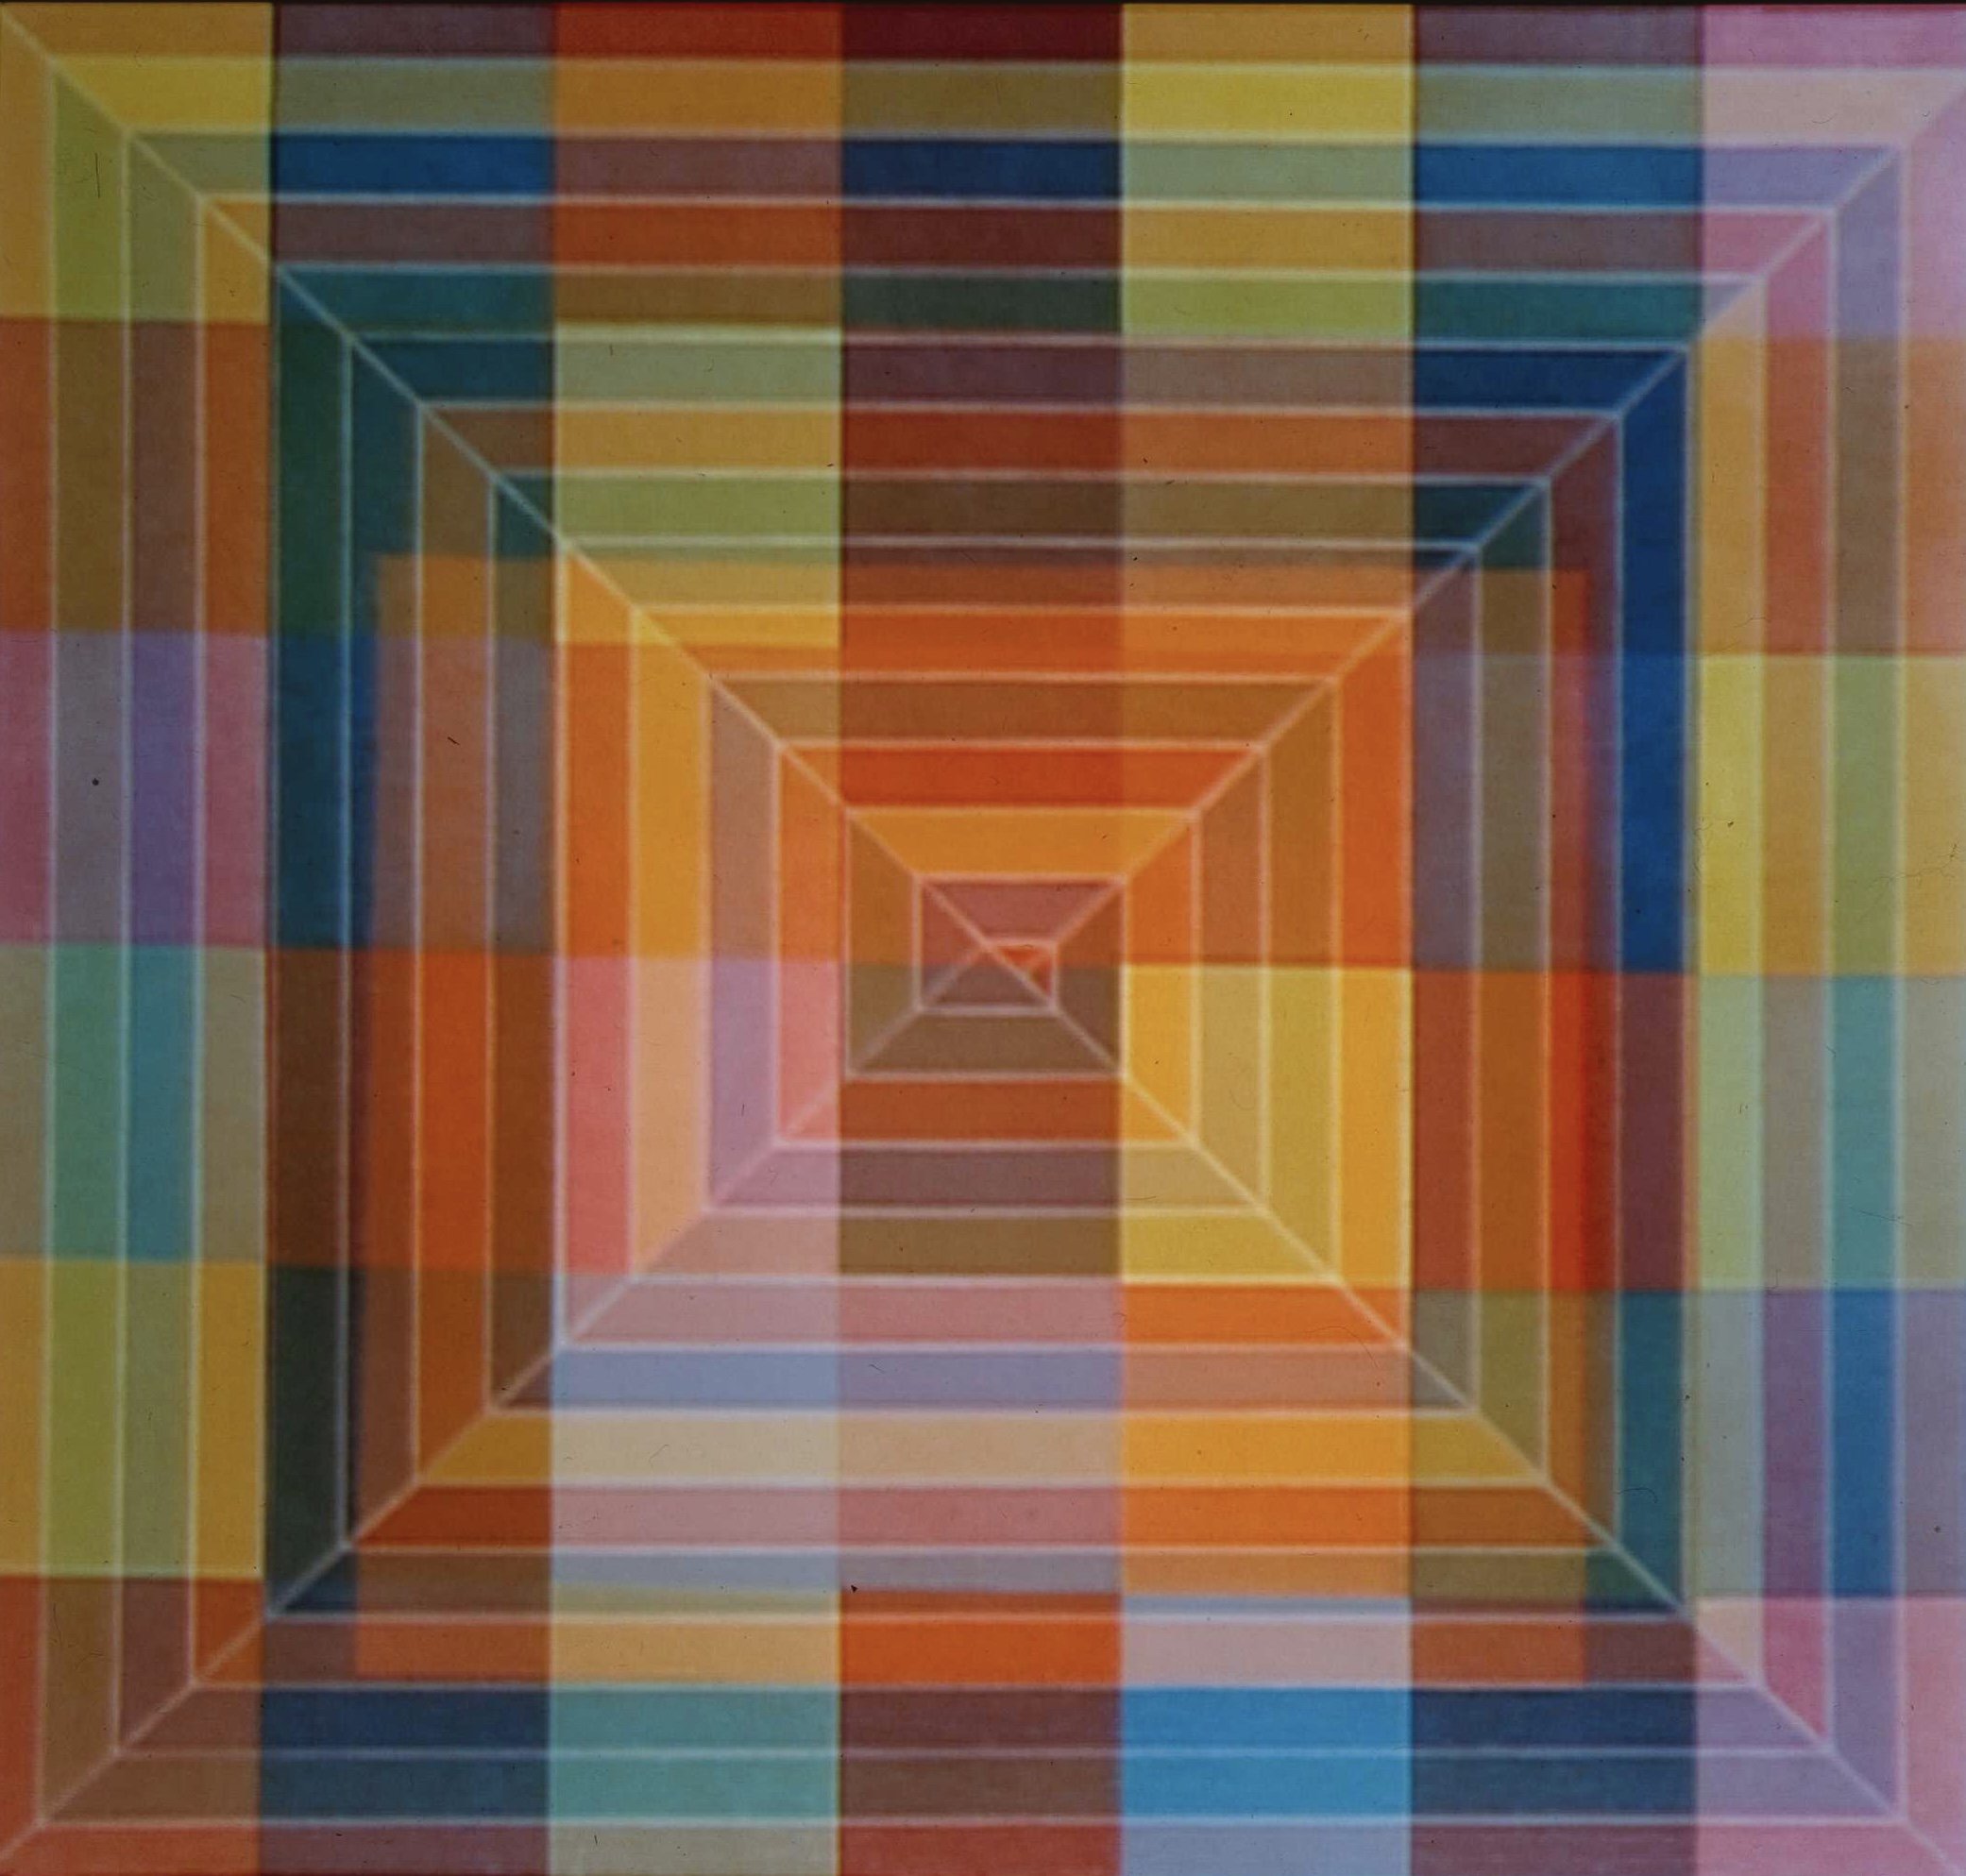 Color Composite Paintings: Stella/Kelly/Albers, 1986